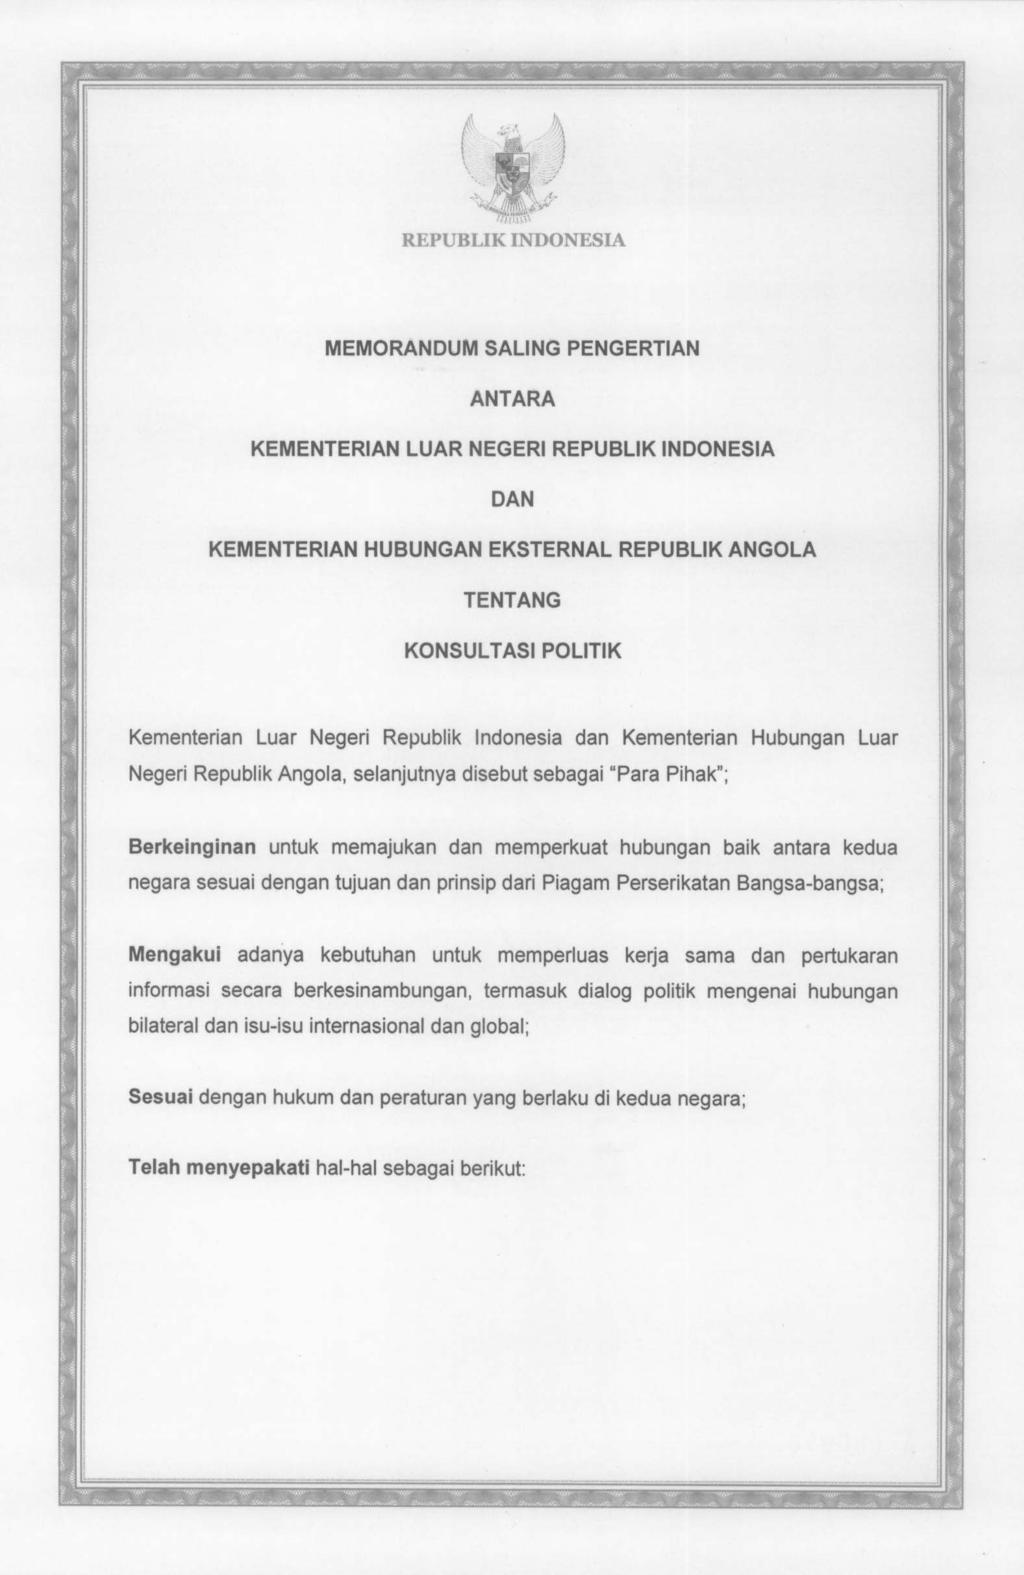 REPUBLIK INDONESIA MEMORANDUM SALING PENGERTIAN ANT ARA KEMENTERIAN LUAR NEGERI REPUBLIK INDONESIA DAN KEMENTERIAN HUBUNGAN EKSTERNAL REPUBLIK ANGOLA TENT ANG KONSUL TASI POLITIK Kementerian Luar